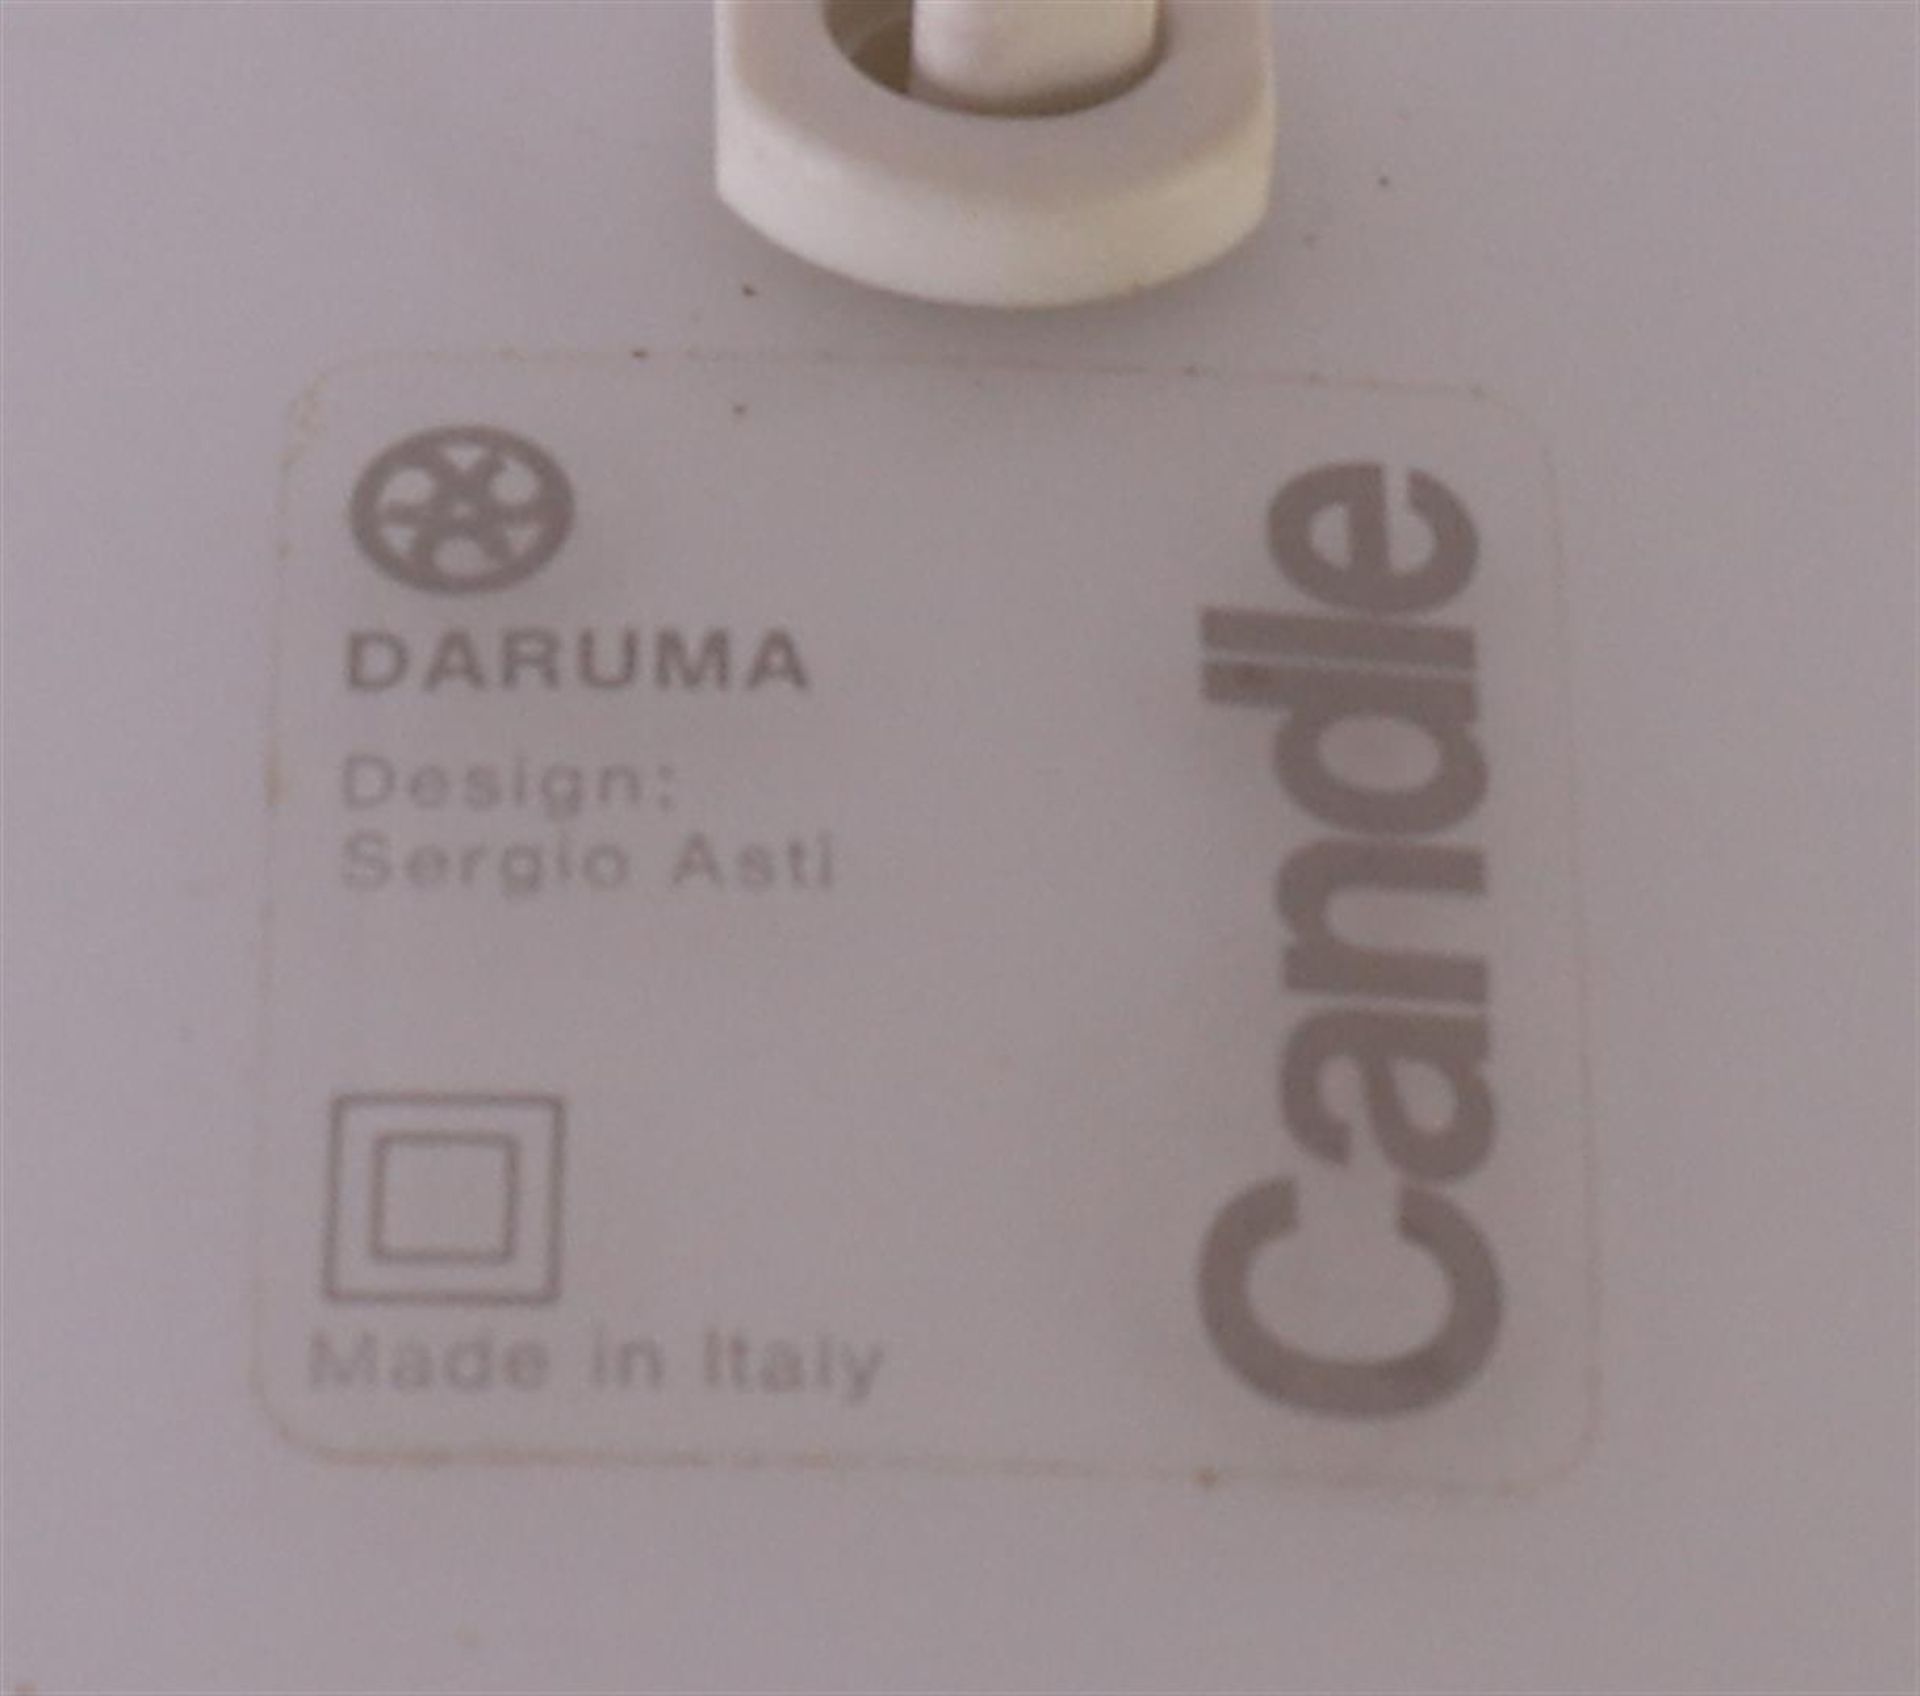 A white glass spherical designer table lamp Daruma, design Sergio Asti for Candle, h 20 x Ø 18 cm. - Image 4 of 4